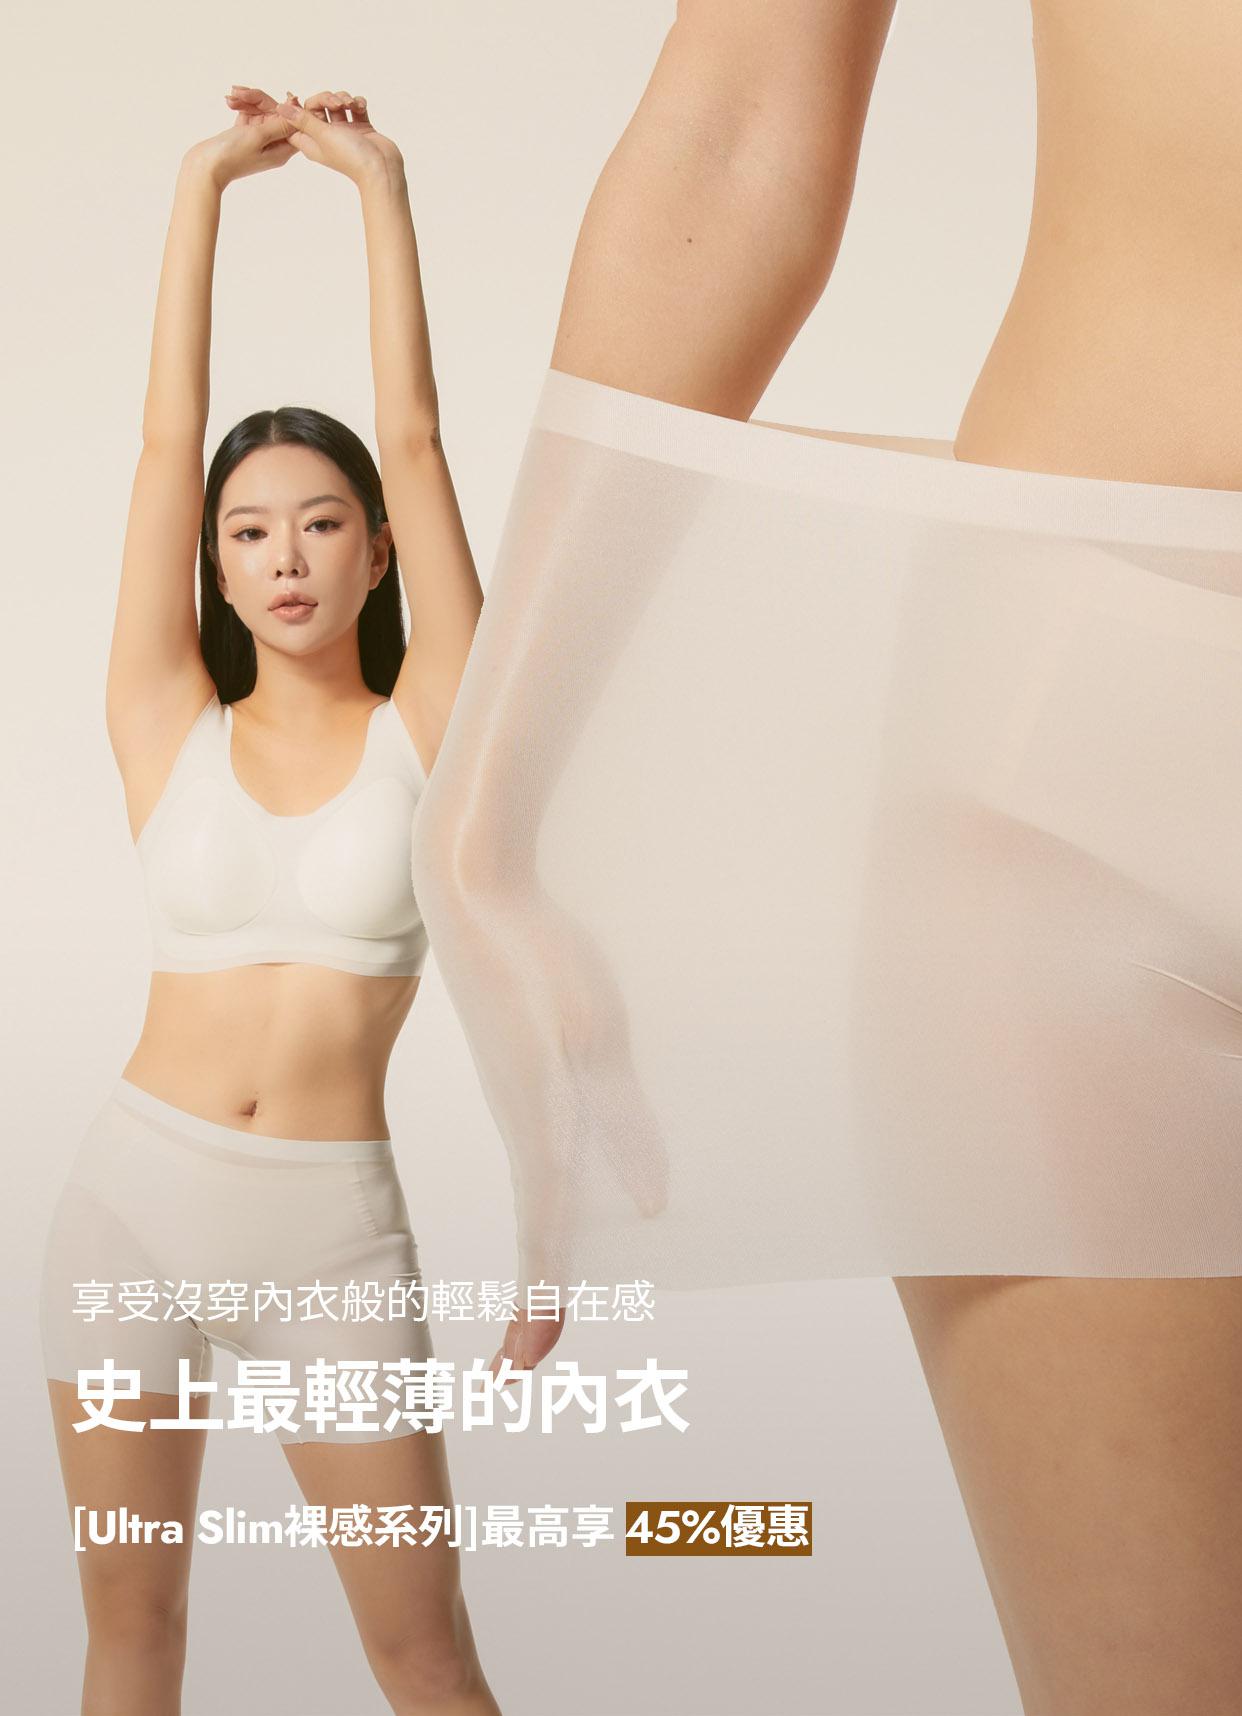 Ultra Slim 羽量裸感内衣&四角内褲首發紀念超值優惠套組 ~45%